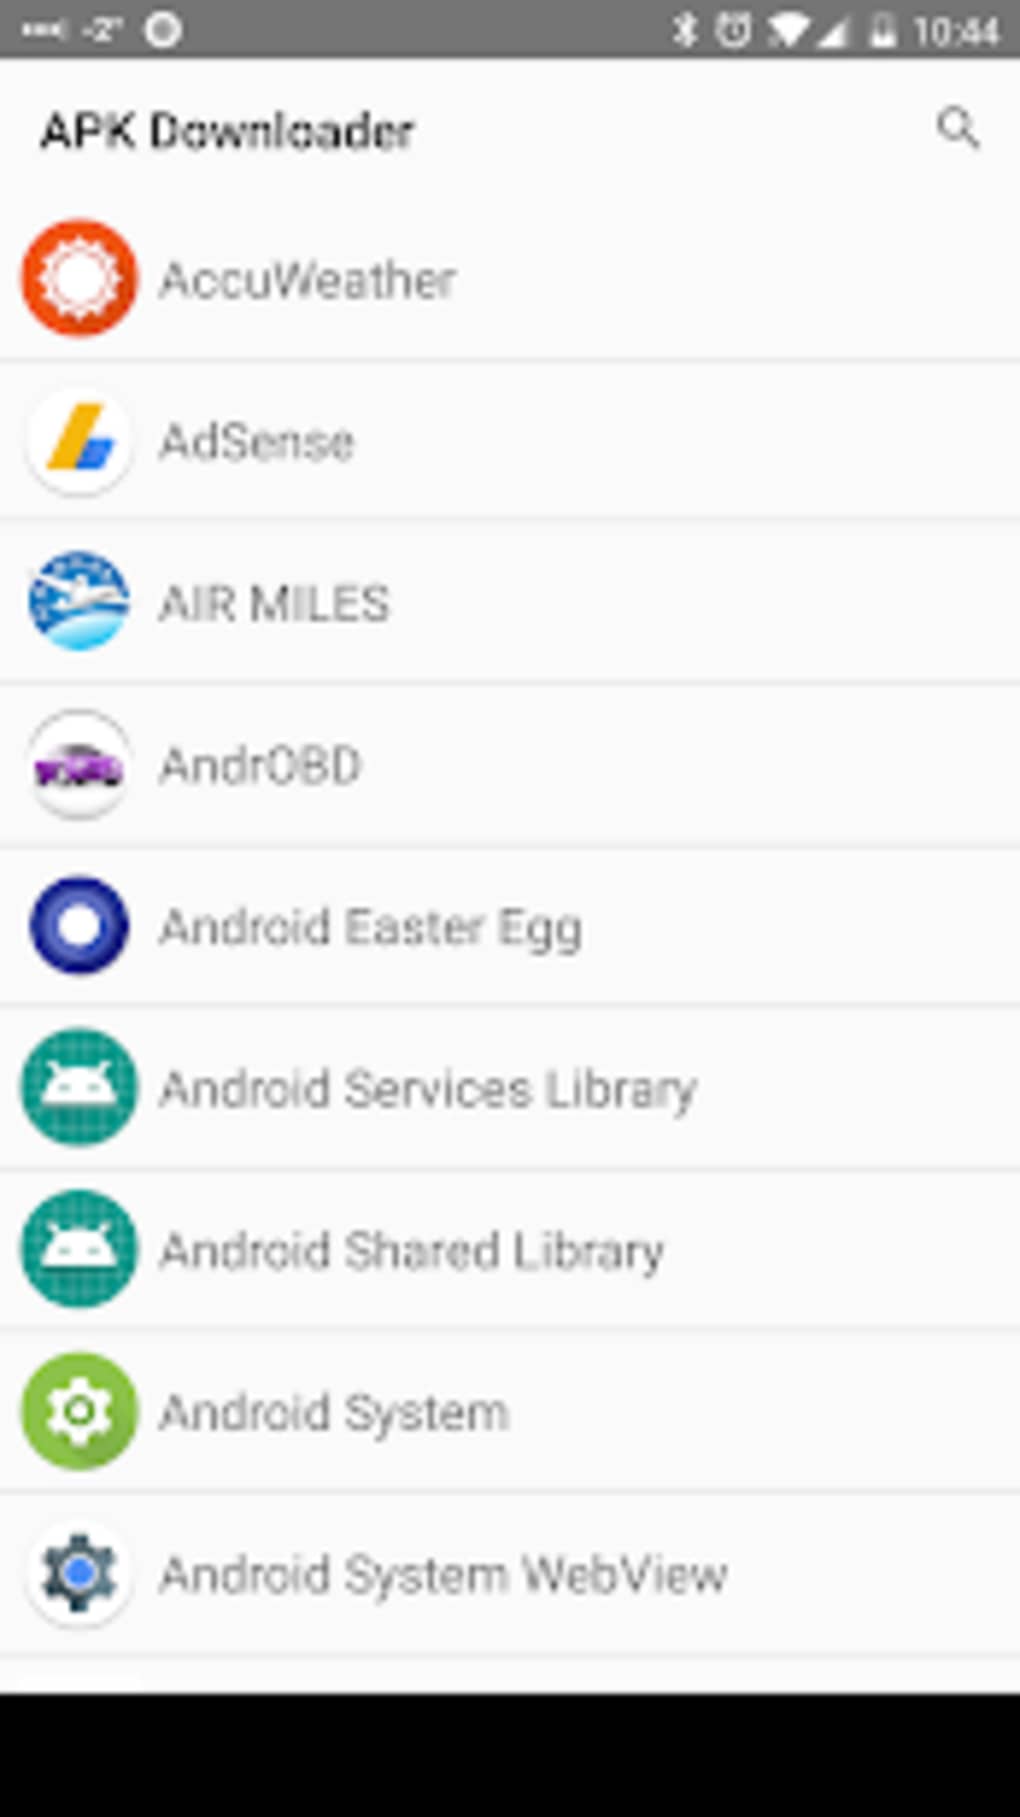 APK Downloader for Android - Download